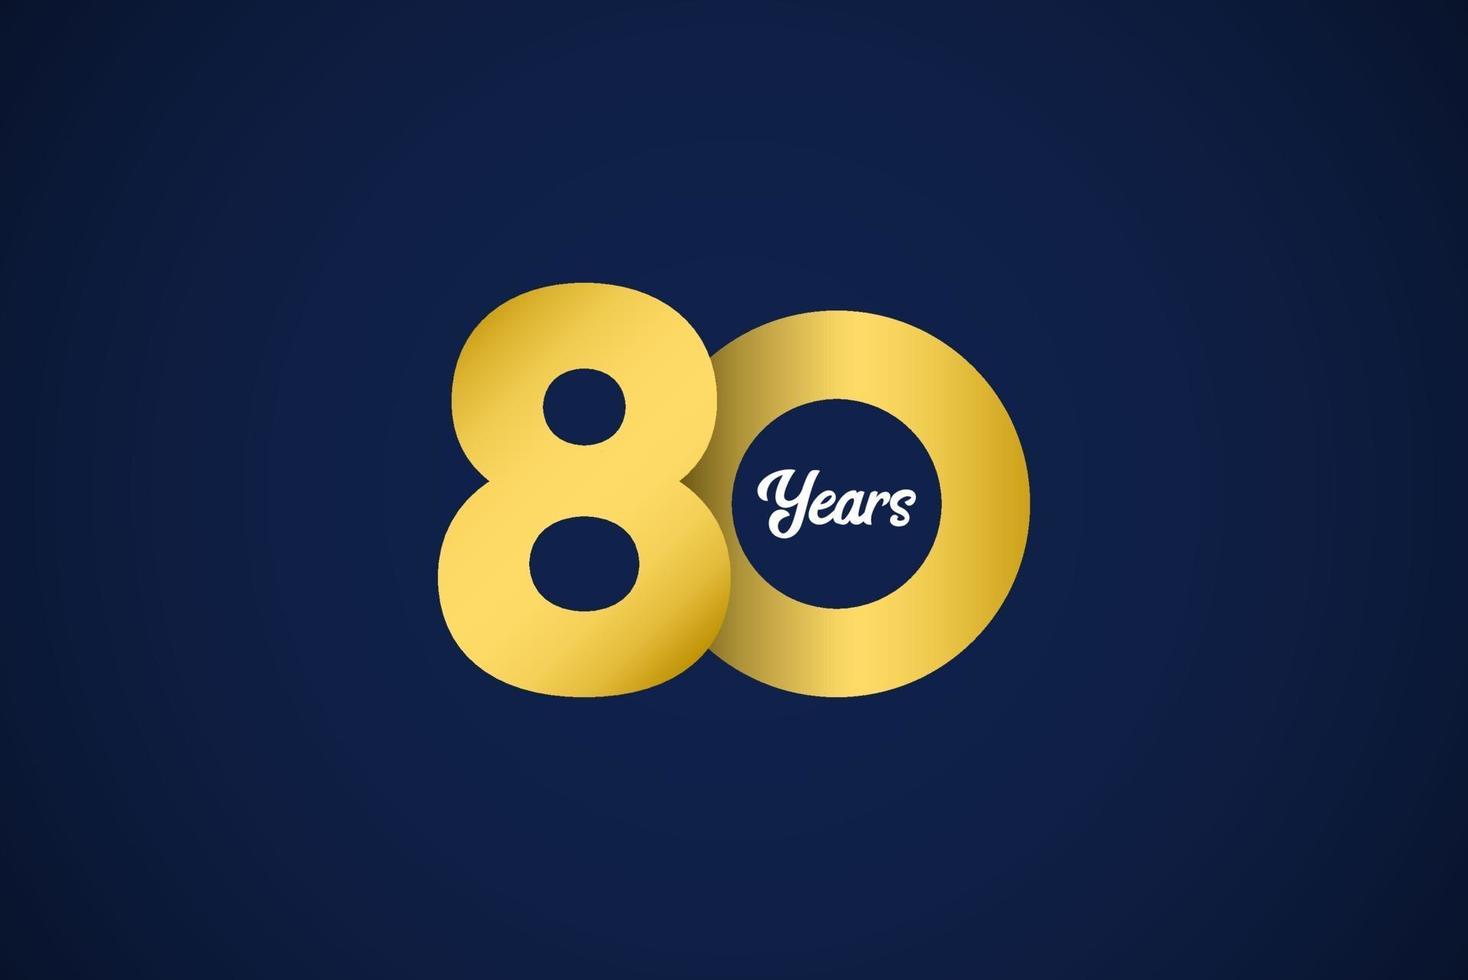 80 Years Anniversary Celebration Gold Vector Template Design Illustration